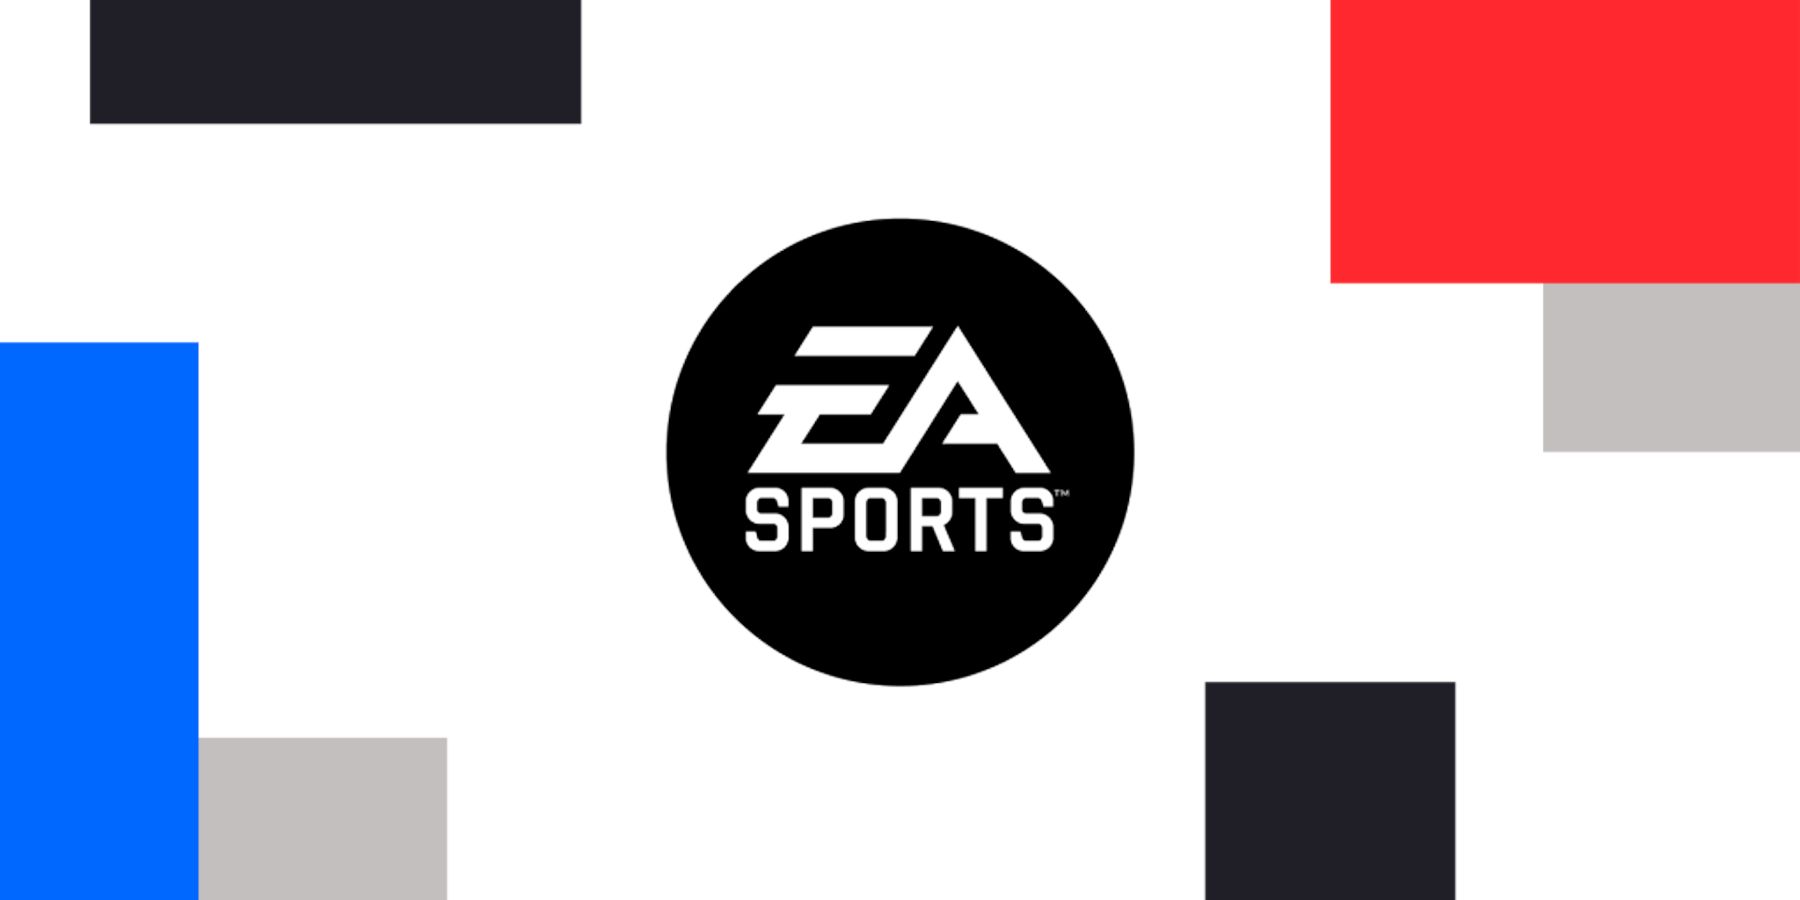 ea sports multicolor logo